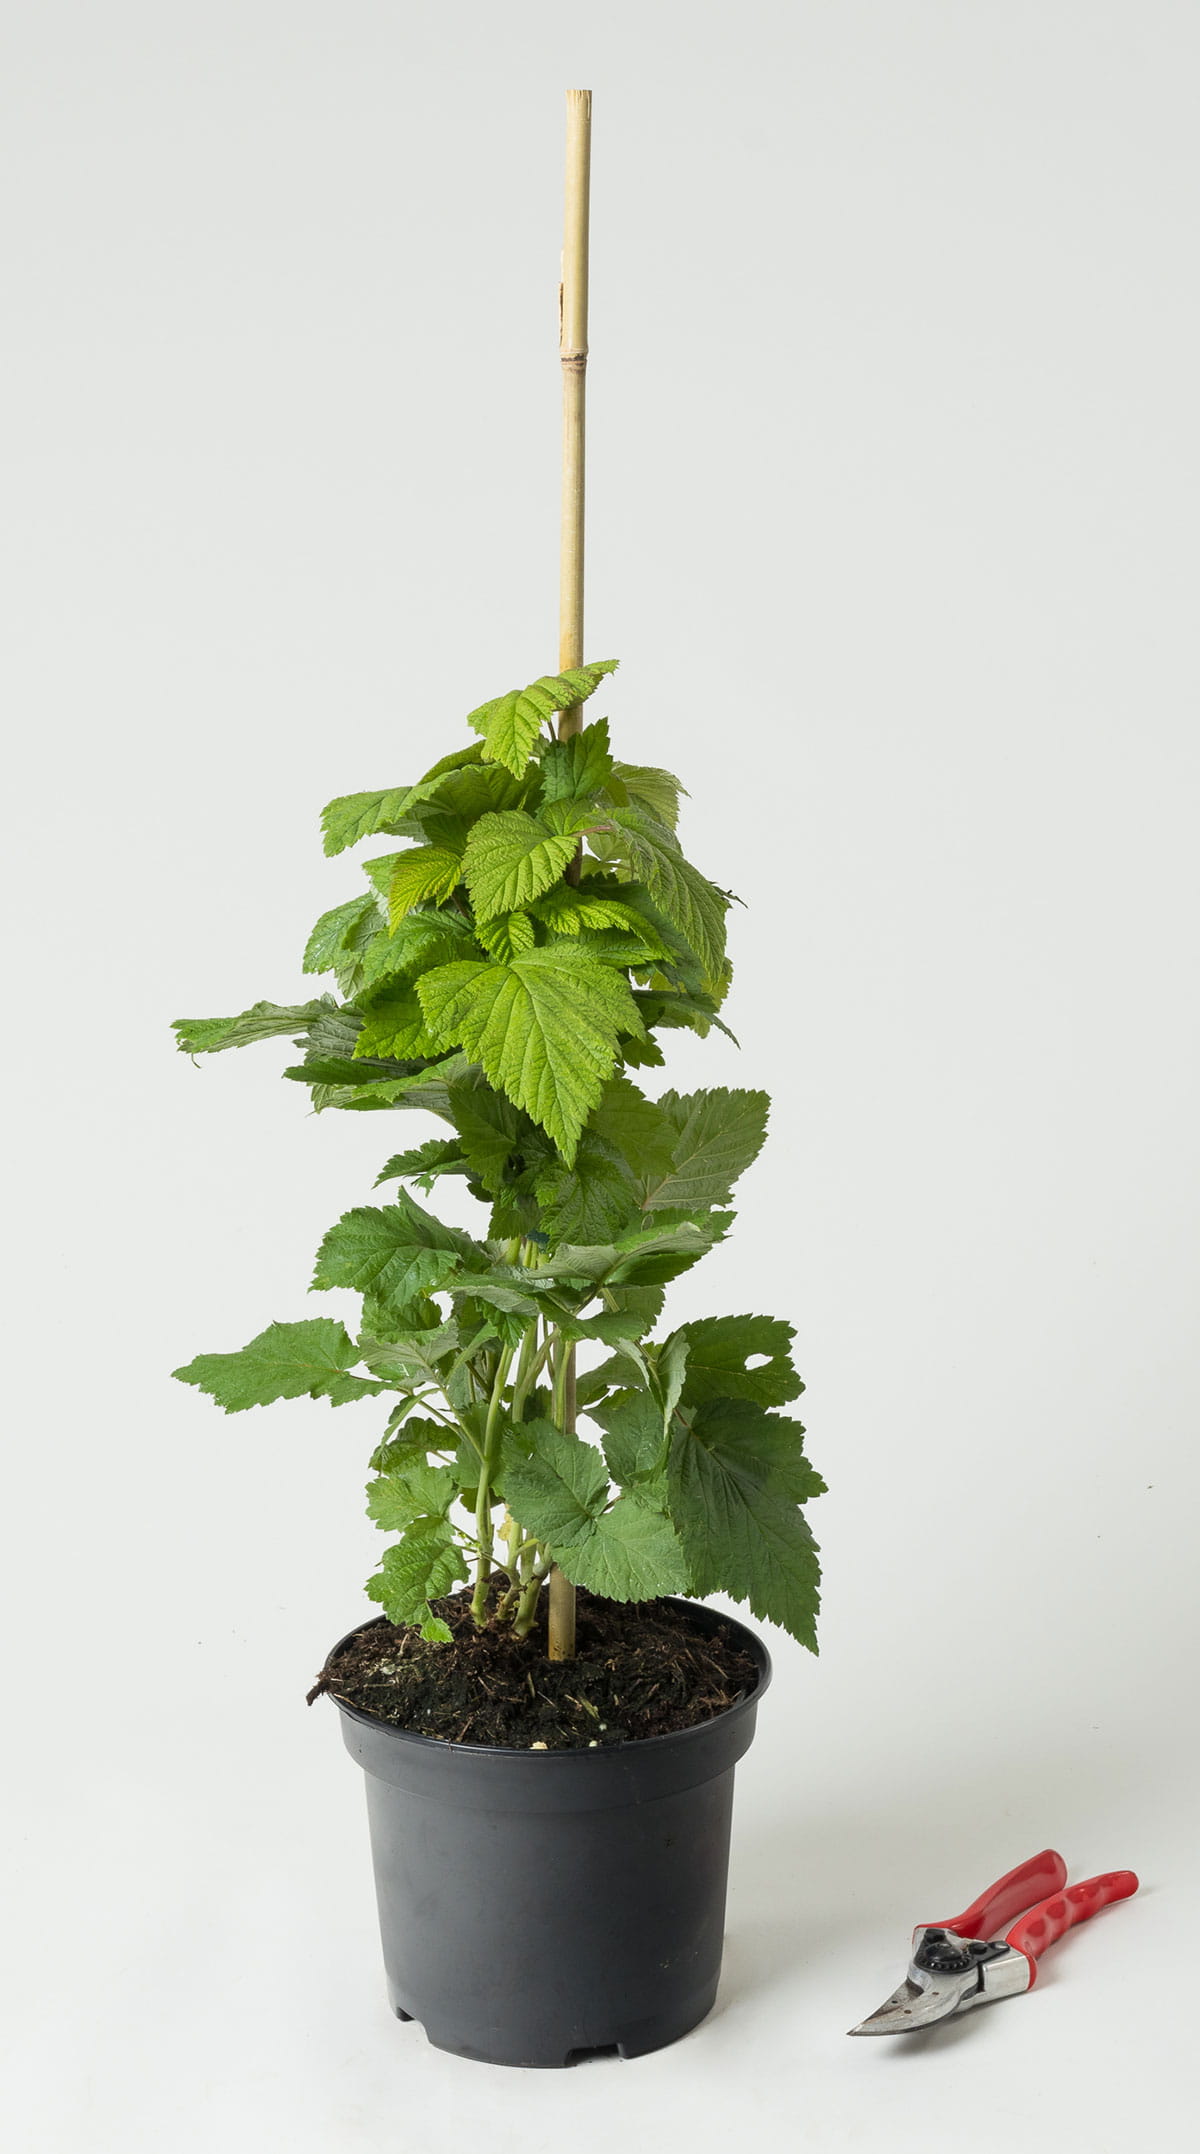 Himbeere 'Glen Ample' • Rubus idaeus 'Glen Ample' Containerware 40-60 cm hoch, Ansicht 1